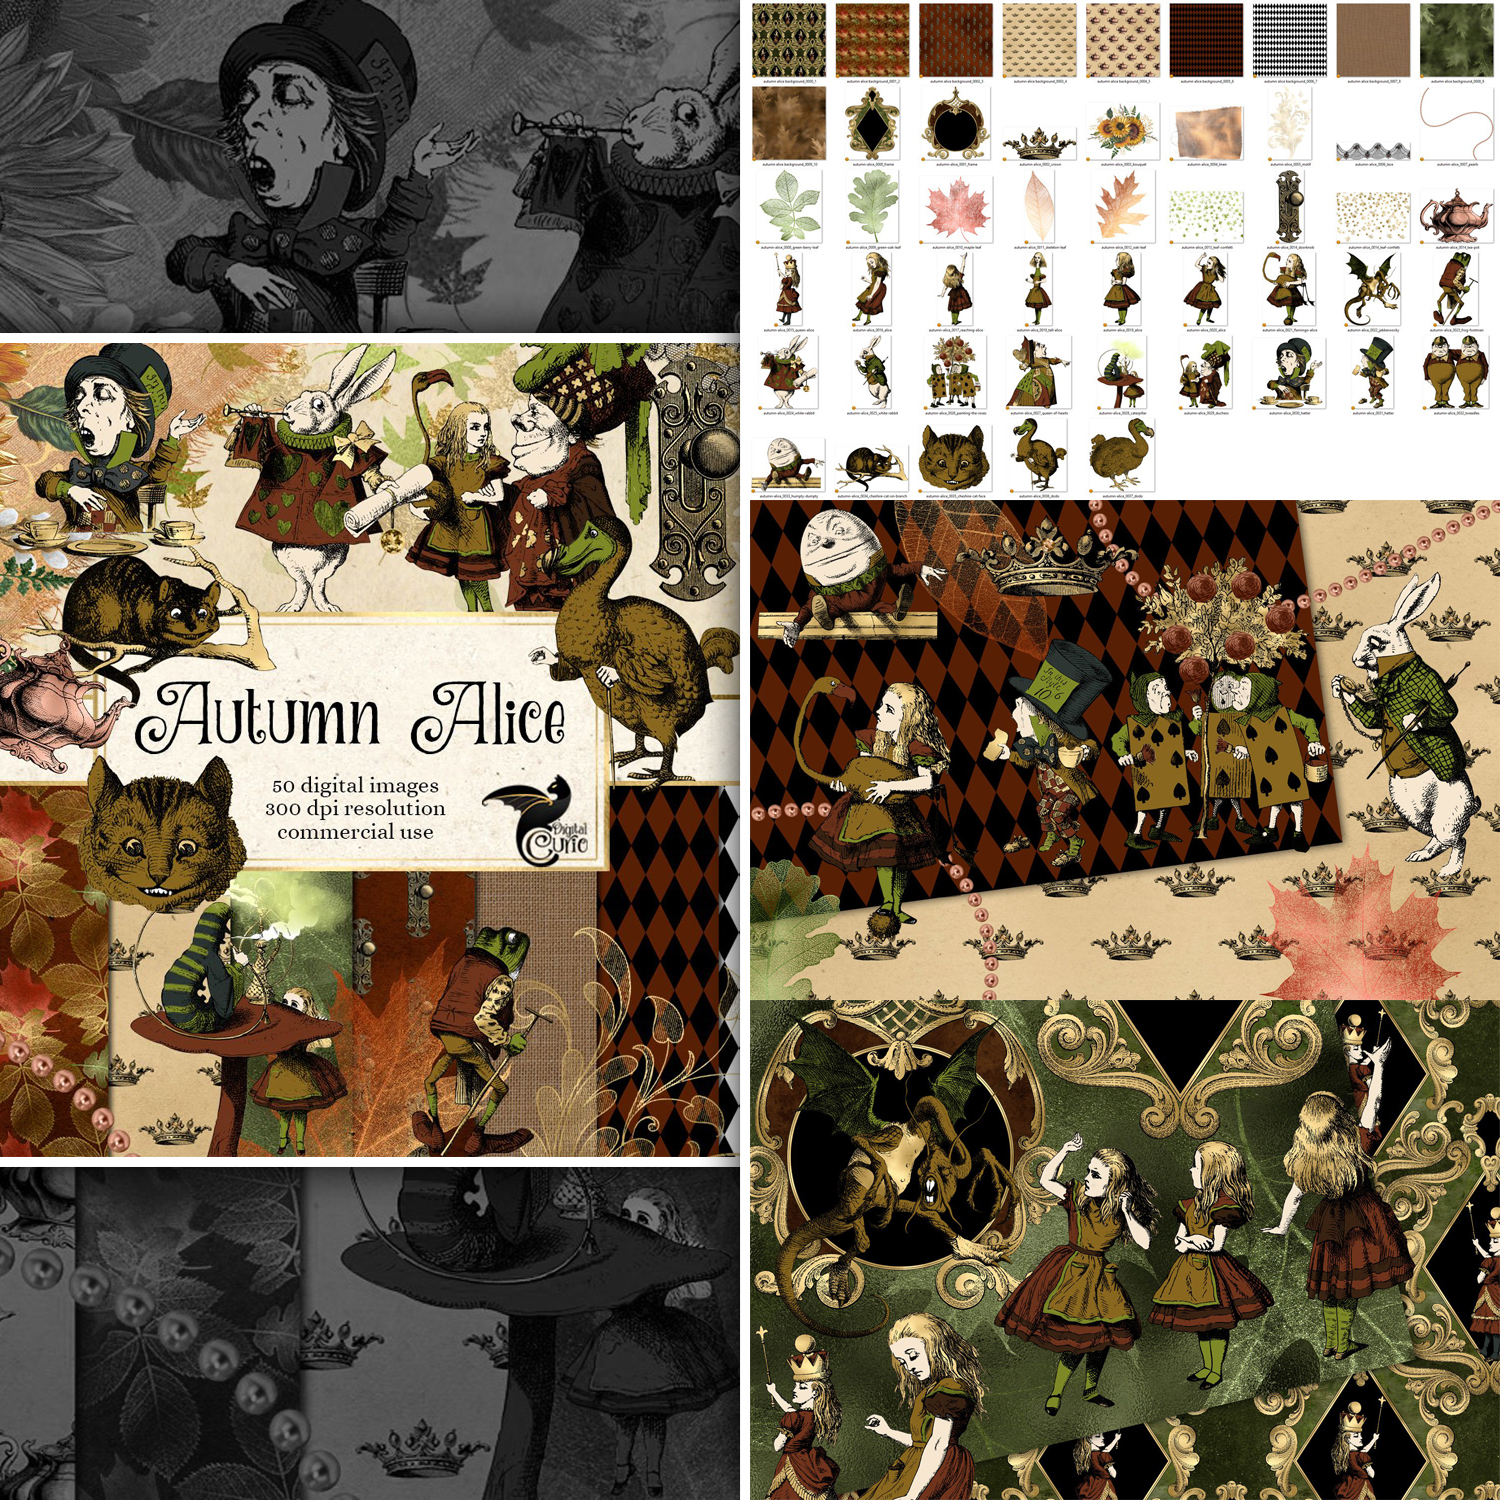 Preview autumn alice in wonderland graphics.